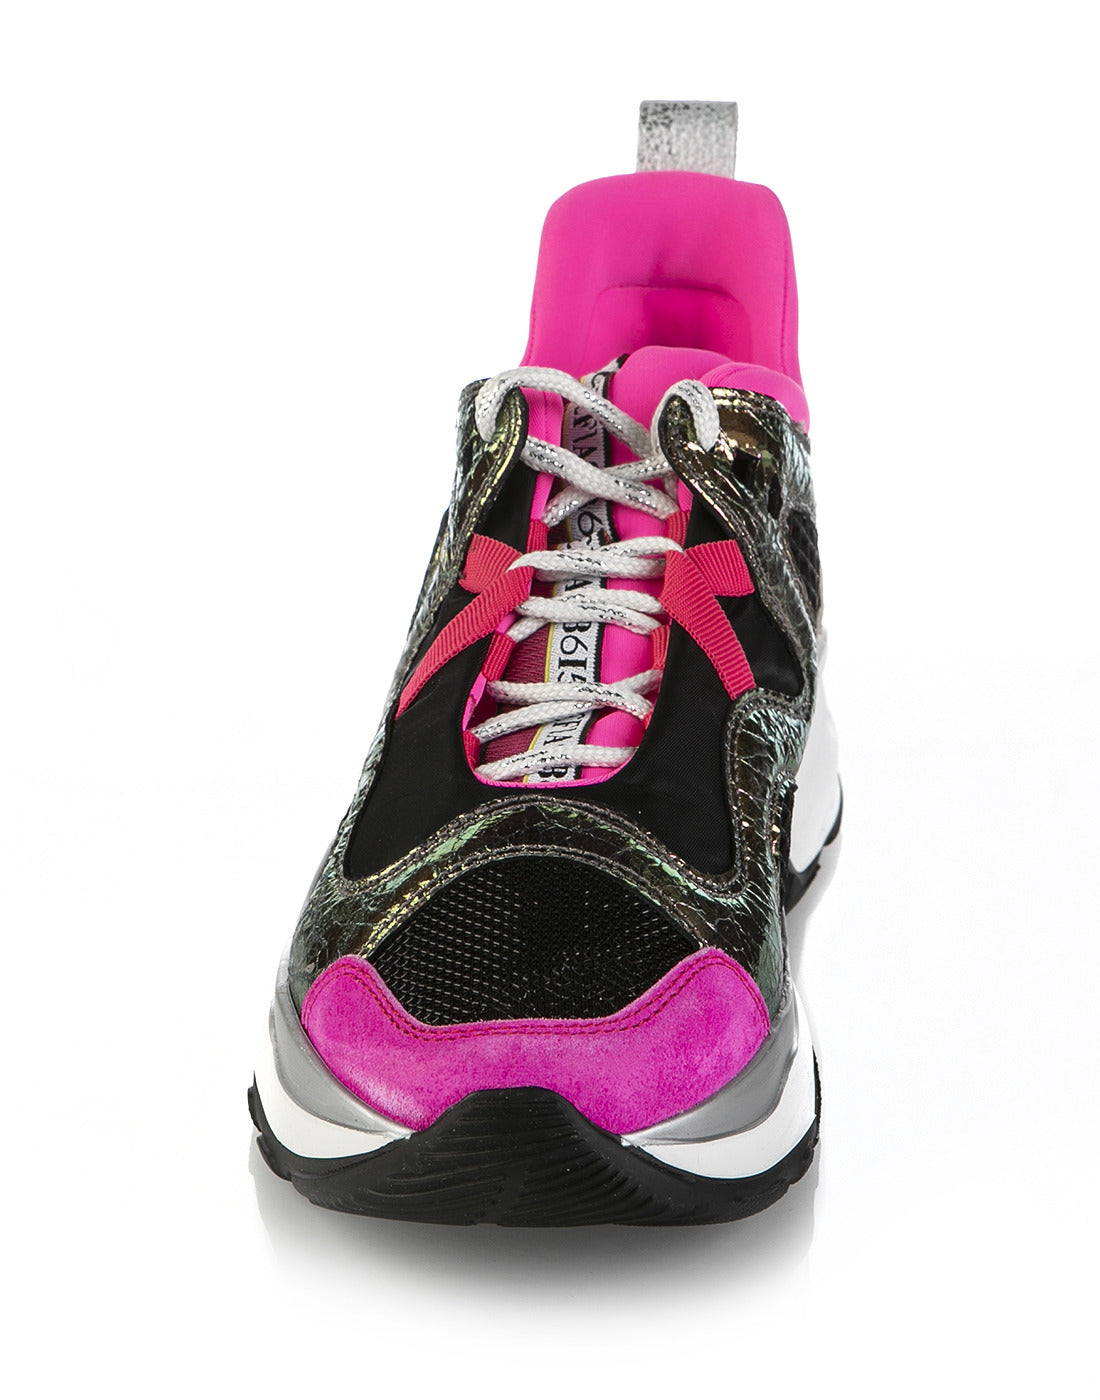 6724 Fabi Barracuda Sneakers / Pink-Black